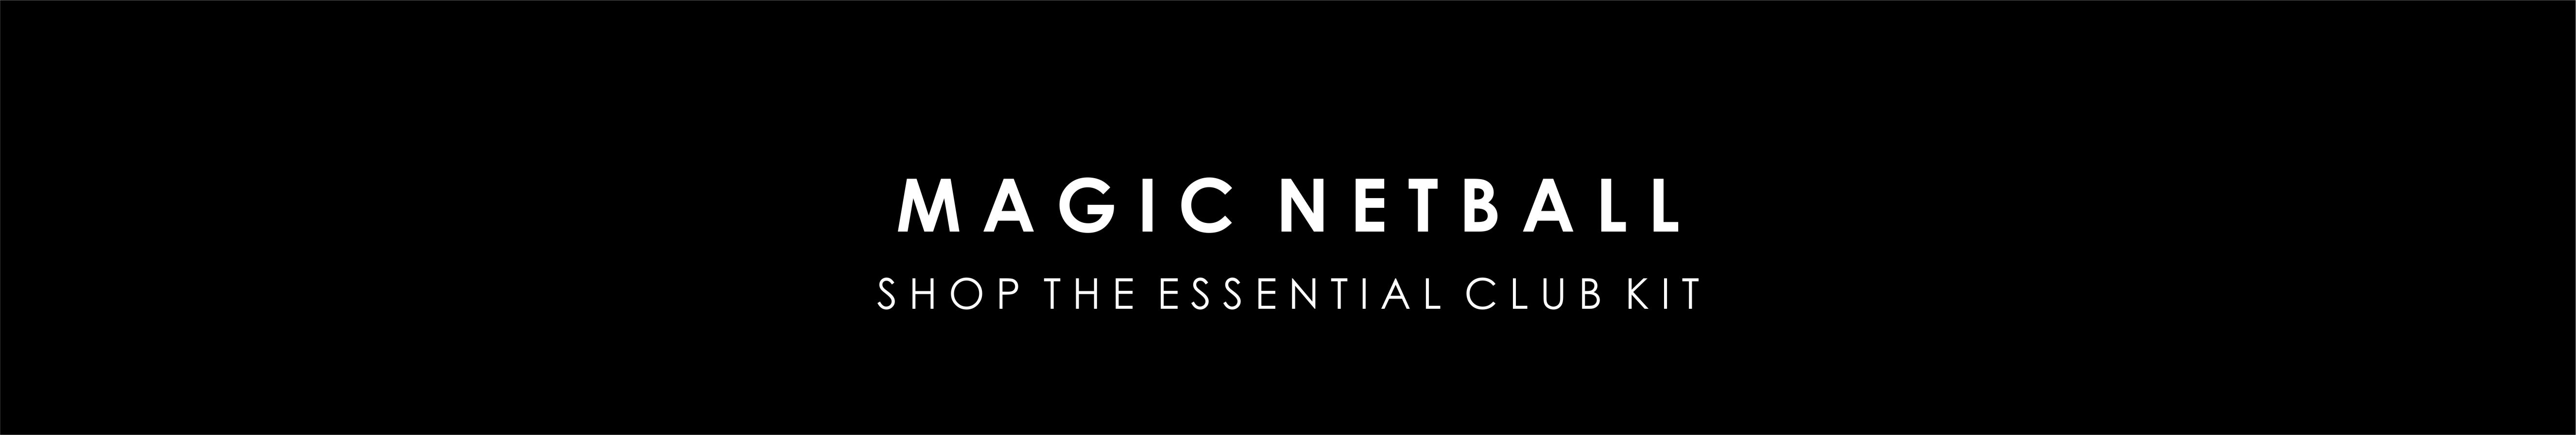 magic-netball-banner.jpg